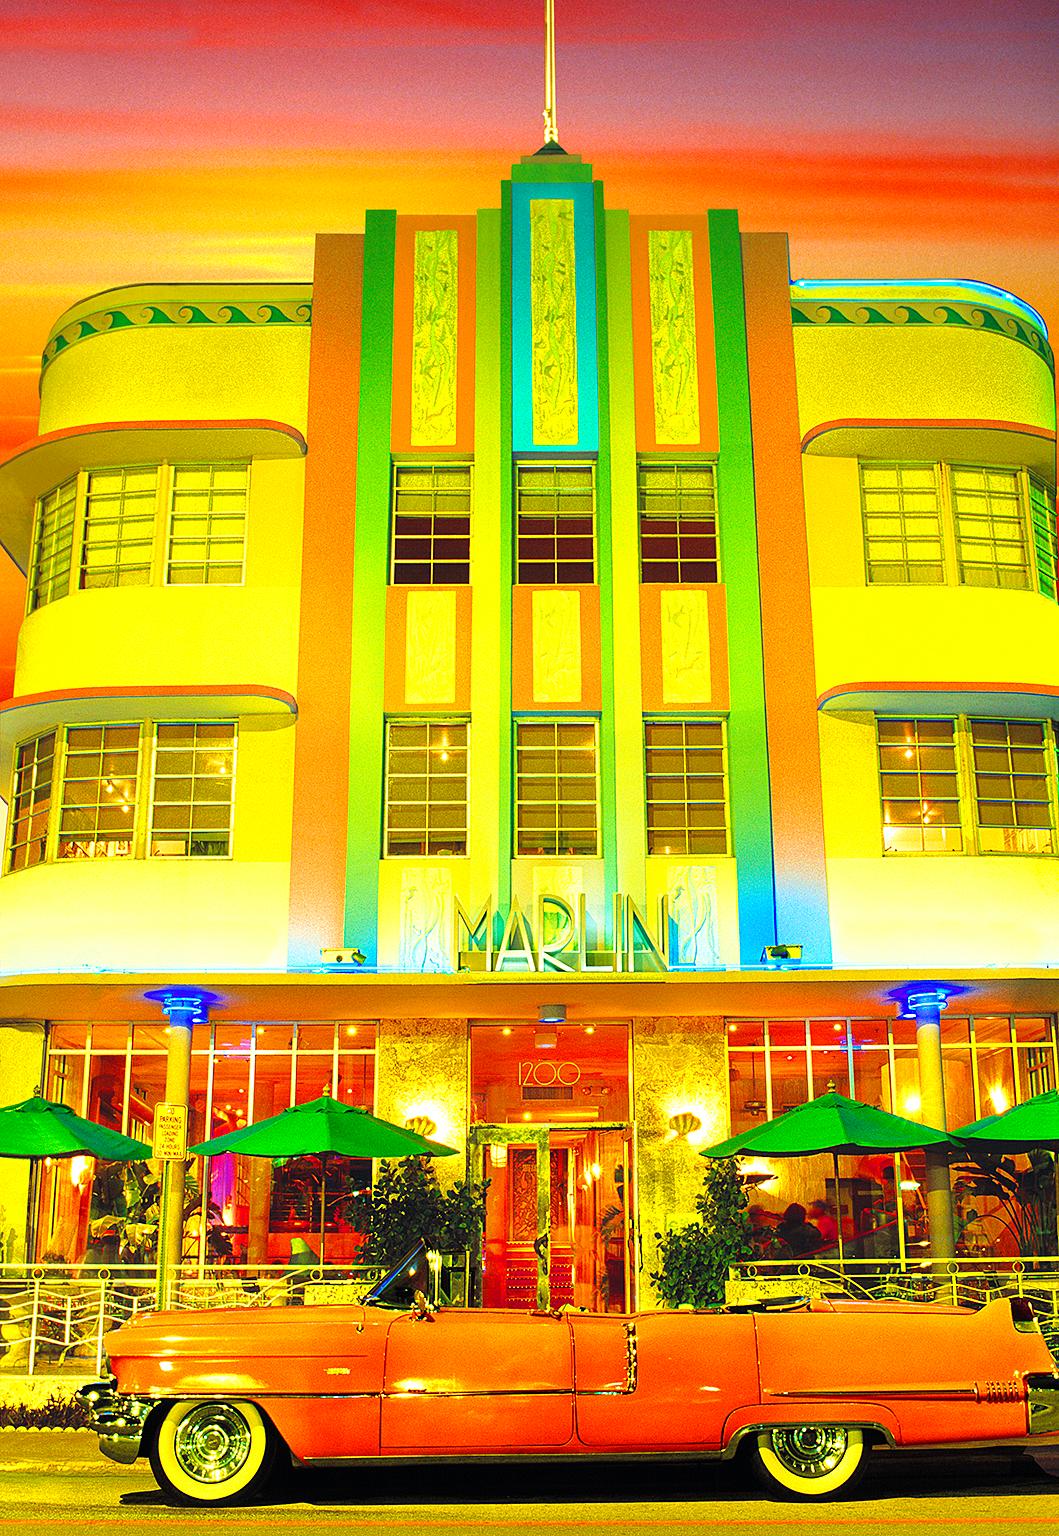 Mitchell Funk Abstract Photograph – Art-Déco-Marlin Hotel in South Beach, Miami Beach, mit heißen Farben 